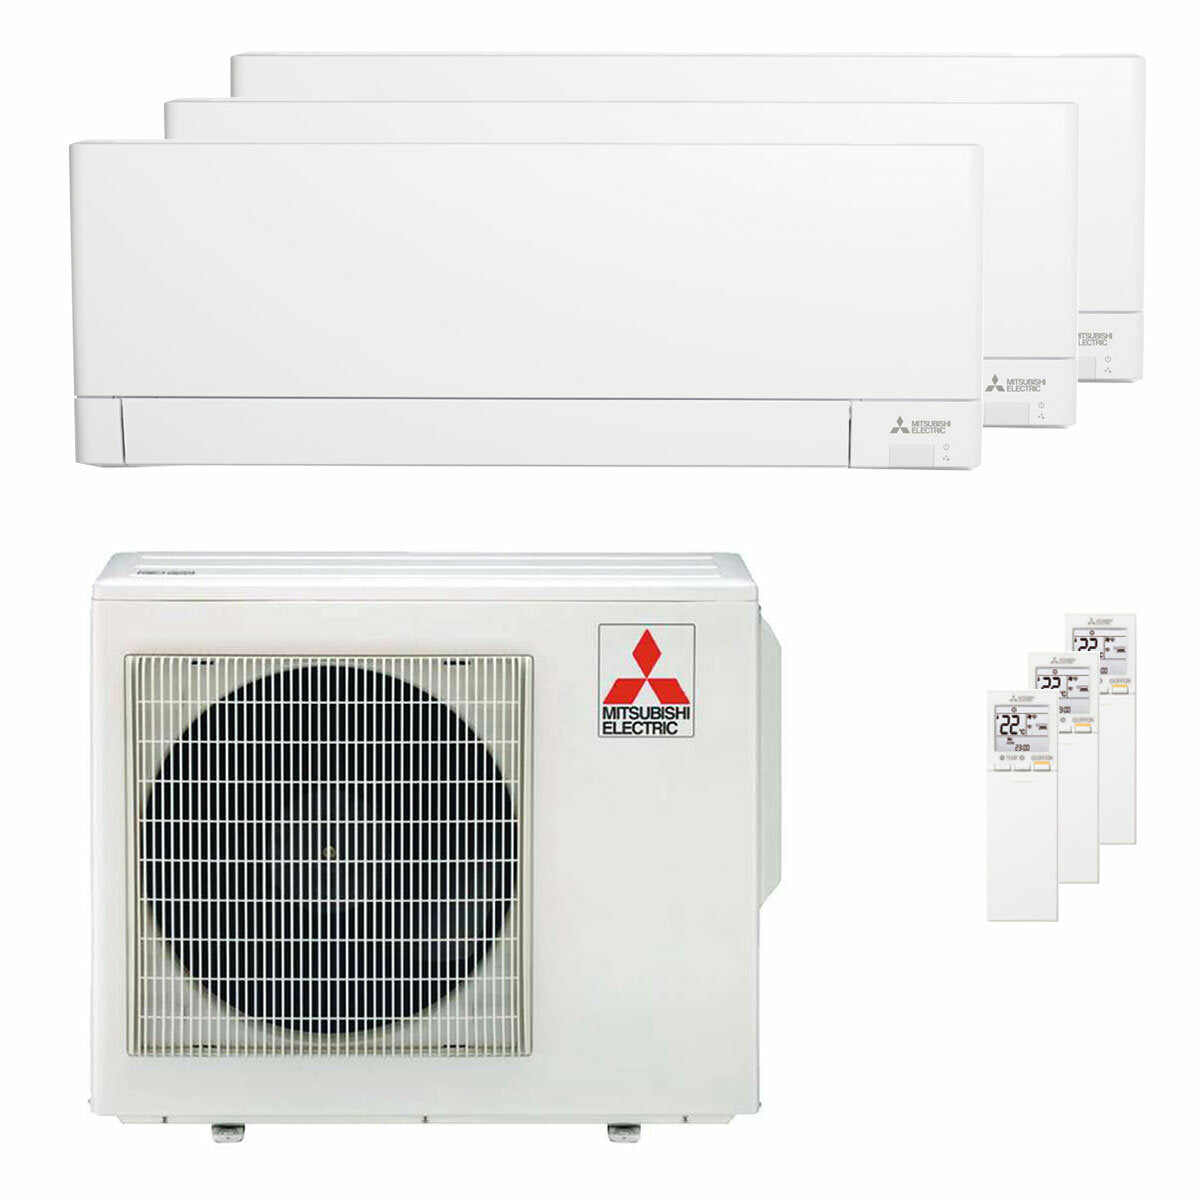 Mitsubishi Electric Air Conditioner AY Series trial split 9000+9000+18000 BTU inverter A++ wifi outdoor unit 5.4 kW